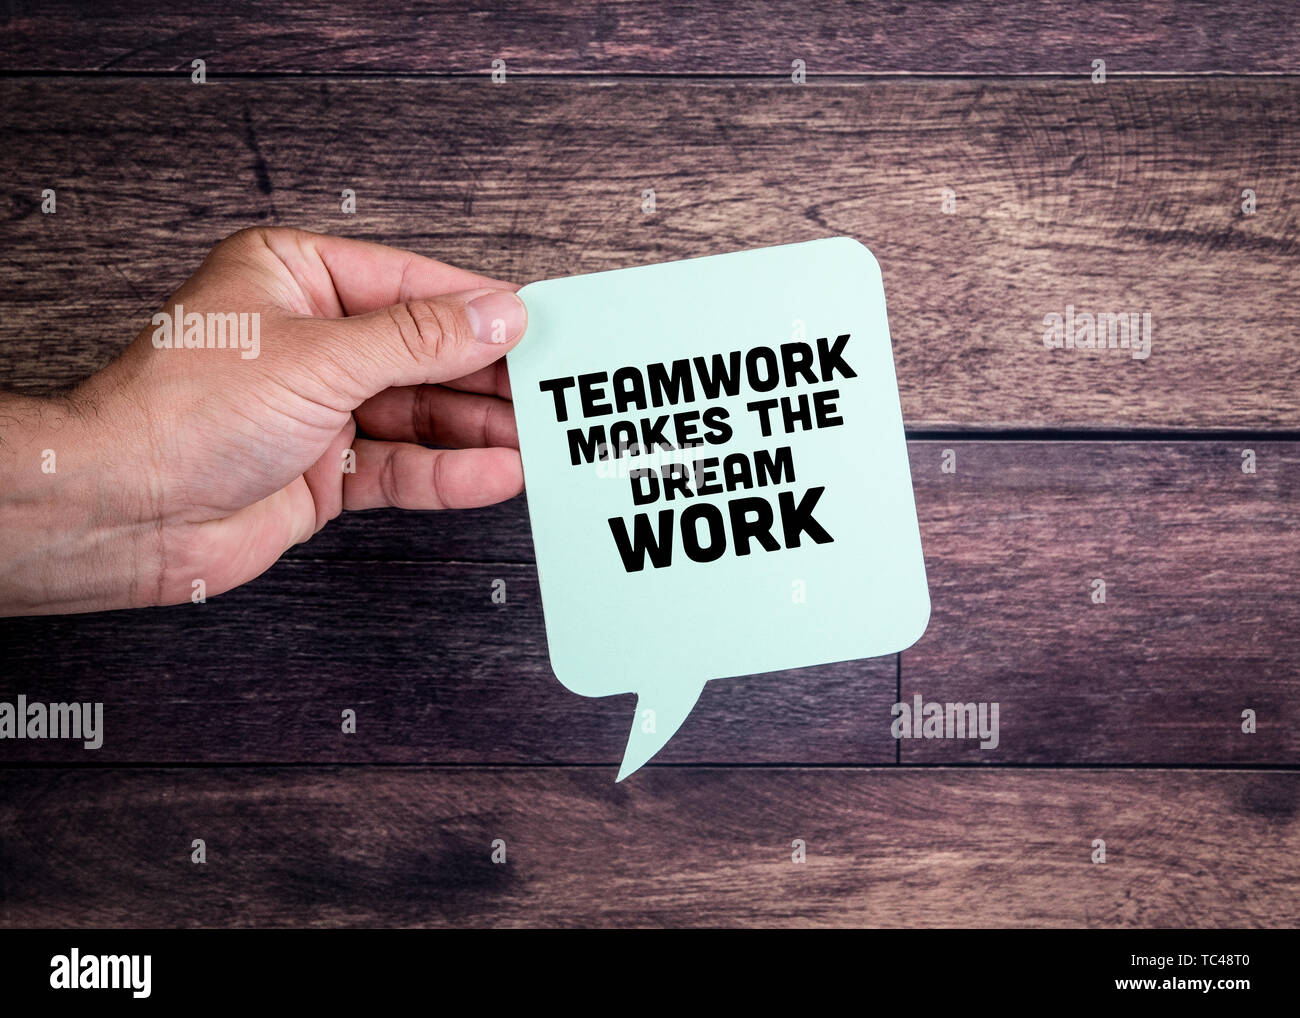 Teamwork makes dream work Stock Photo